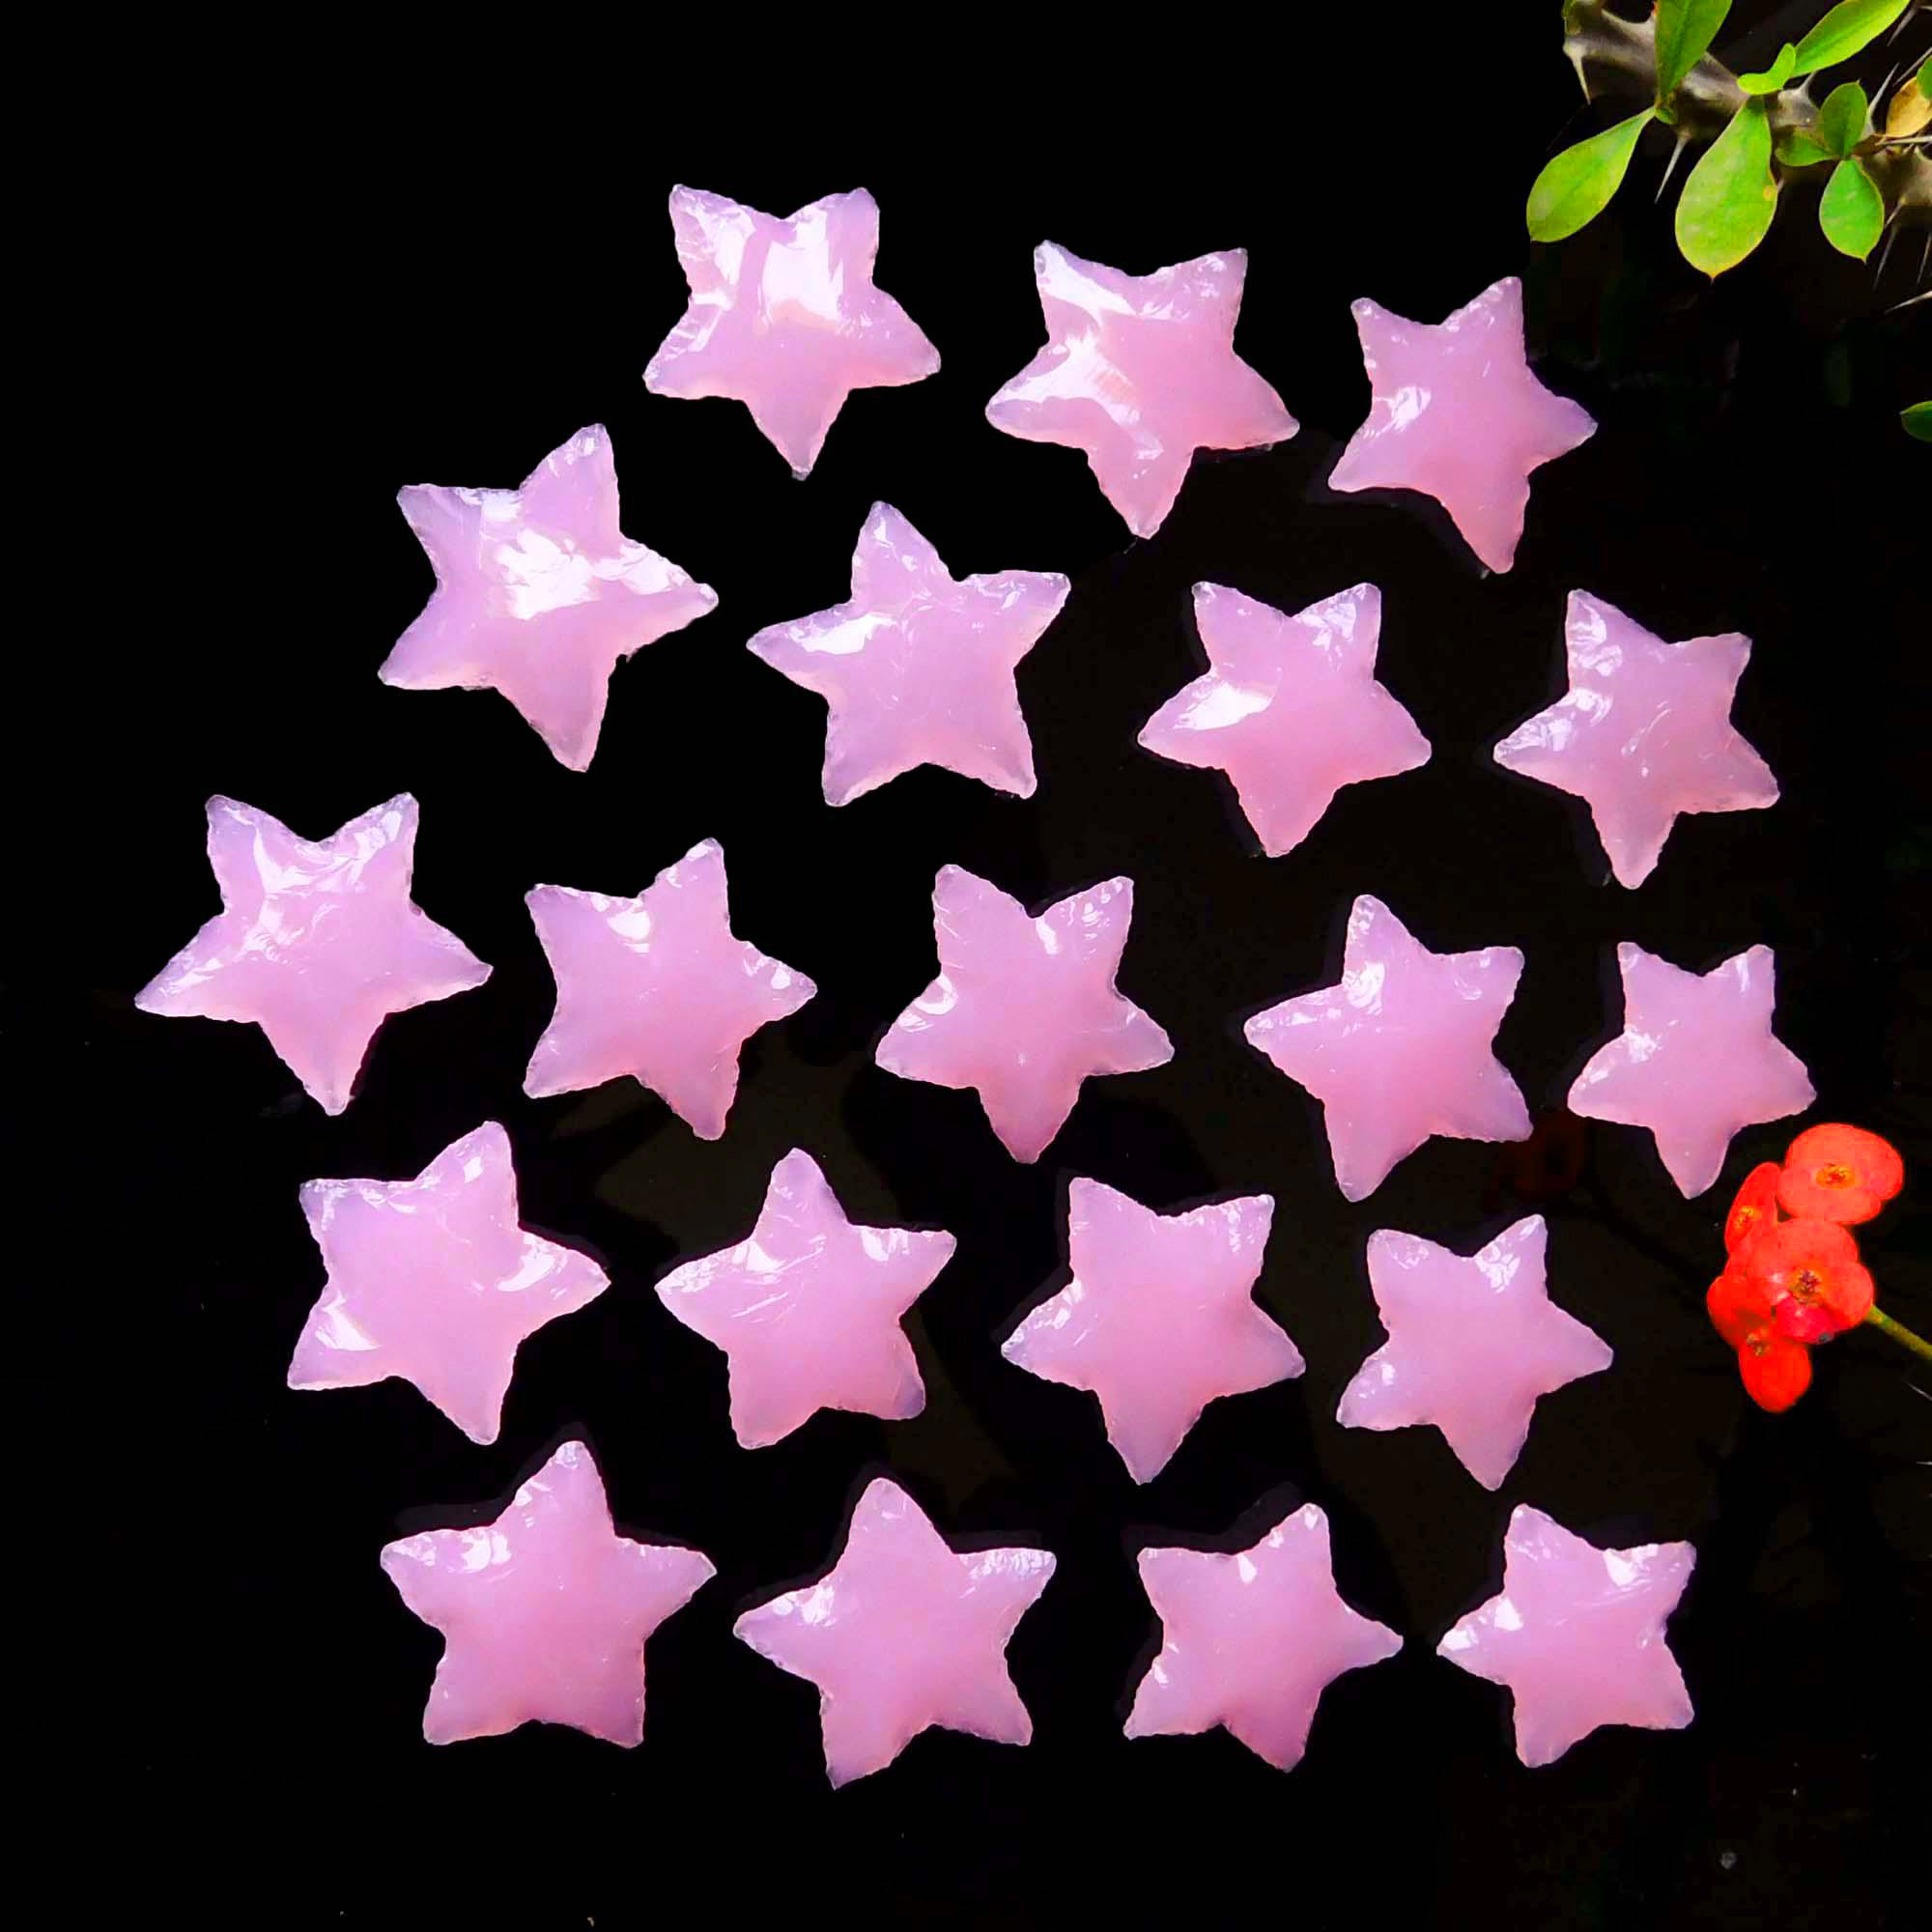 Rose Quartz Star Carving